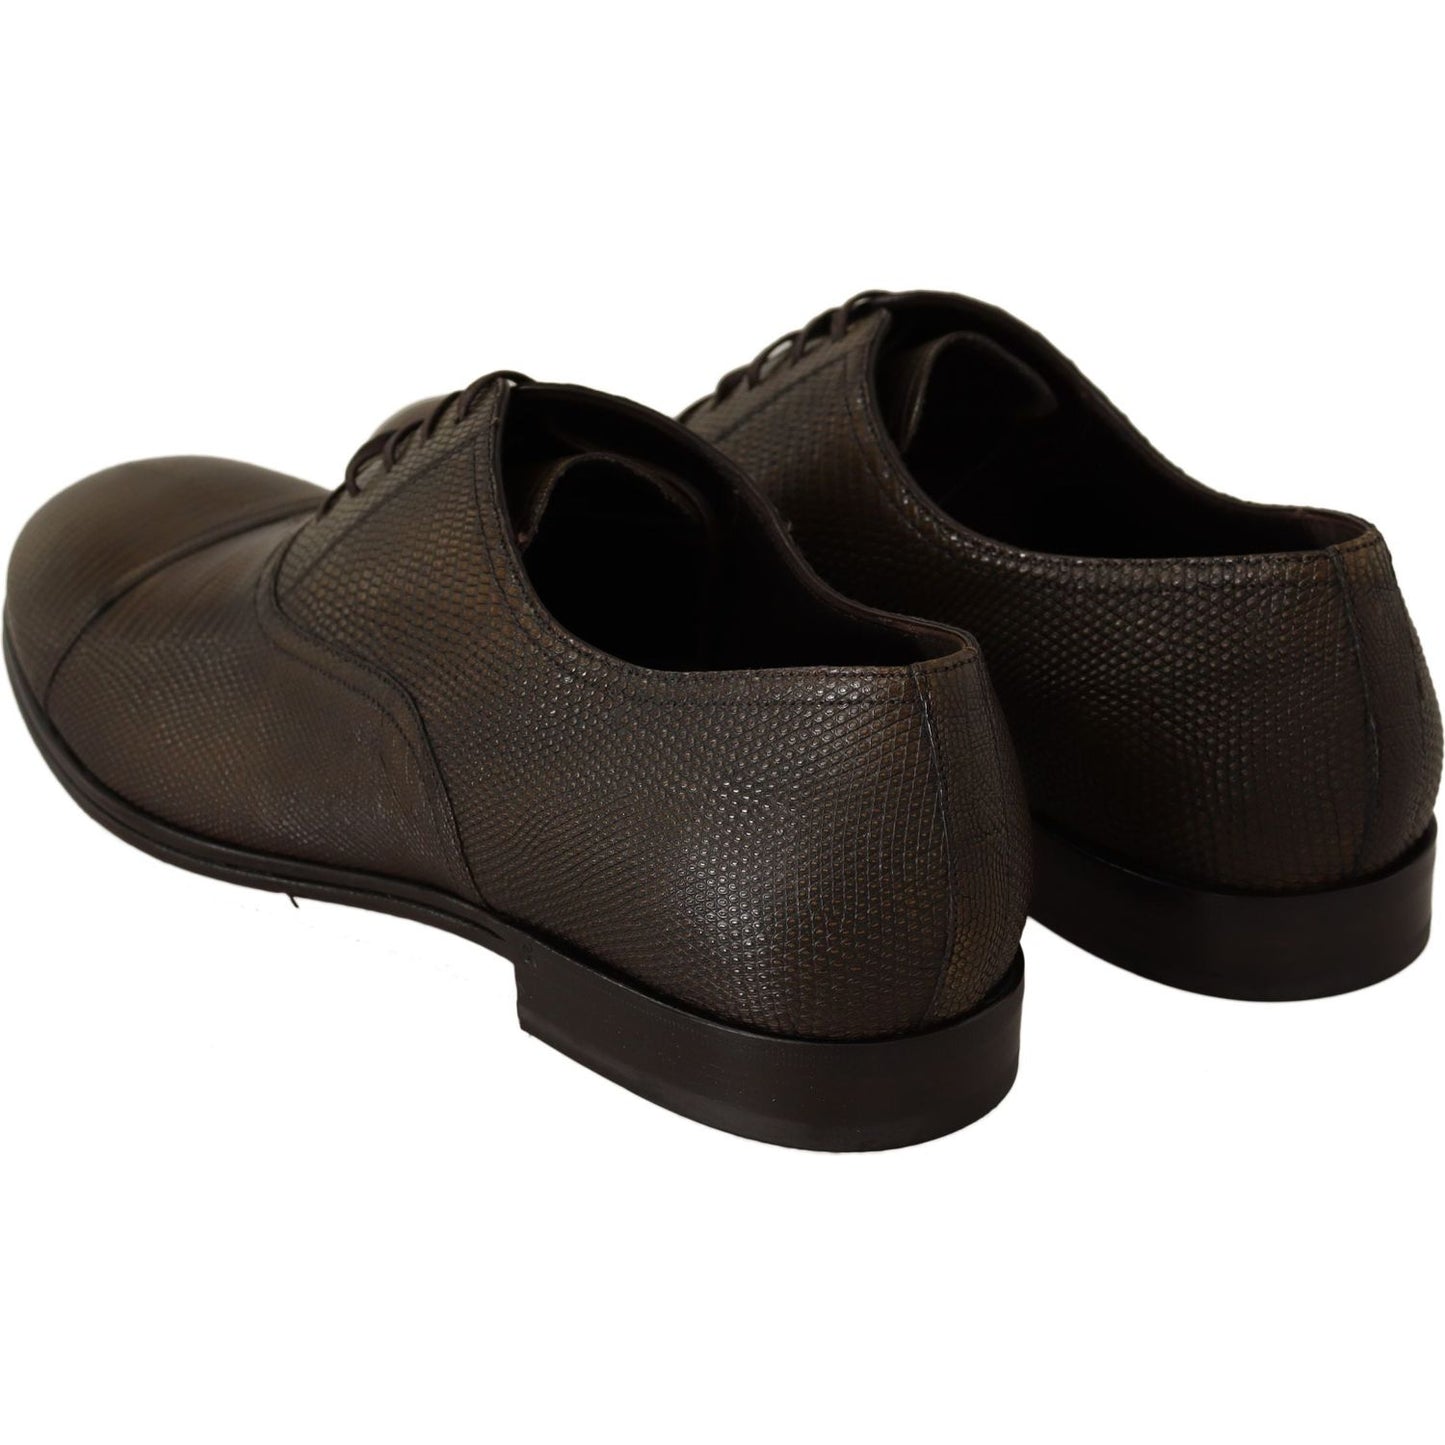 Dolce & Gabbana Elegant Shiny Leather Oxford Shoes brown-lizard-leather-dress-oxford-shoes Dress Shoes IMG_0054-scaled-7566cba6-c40.jpg